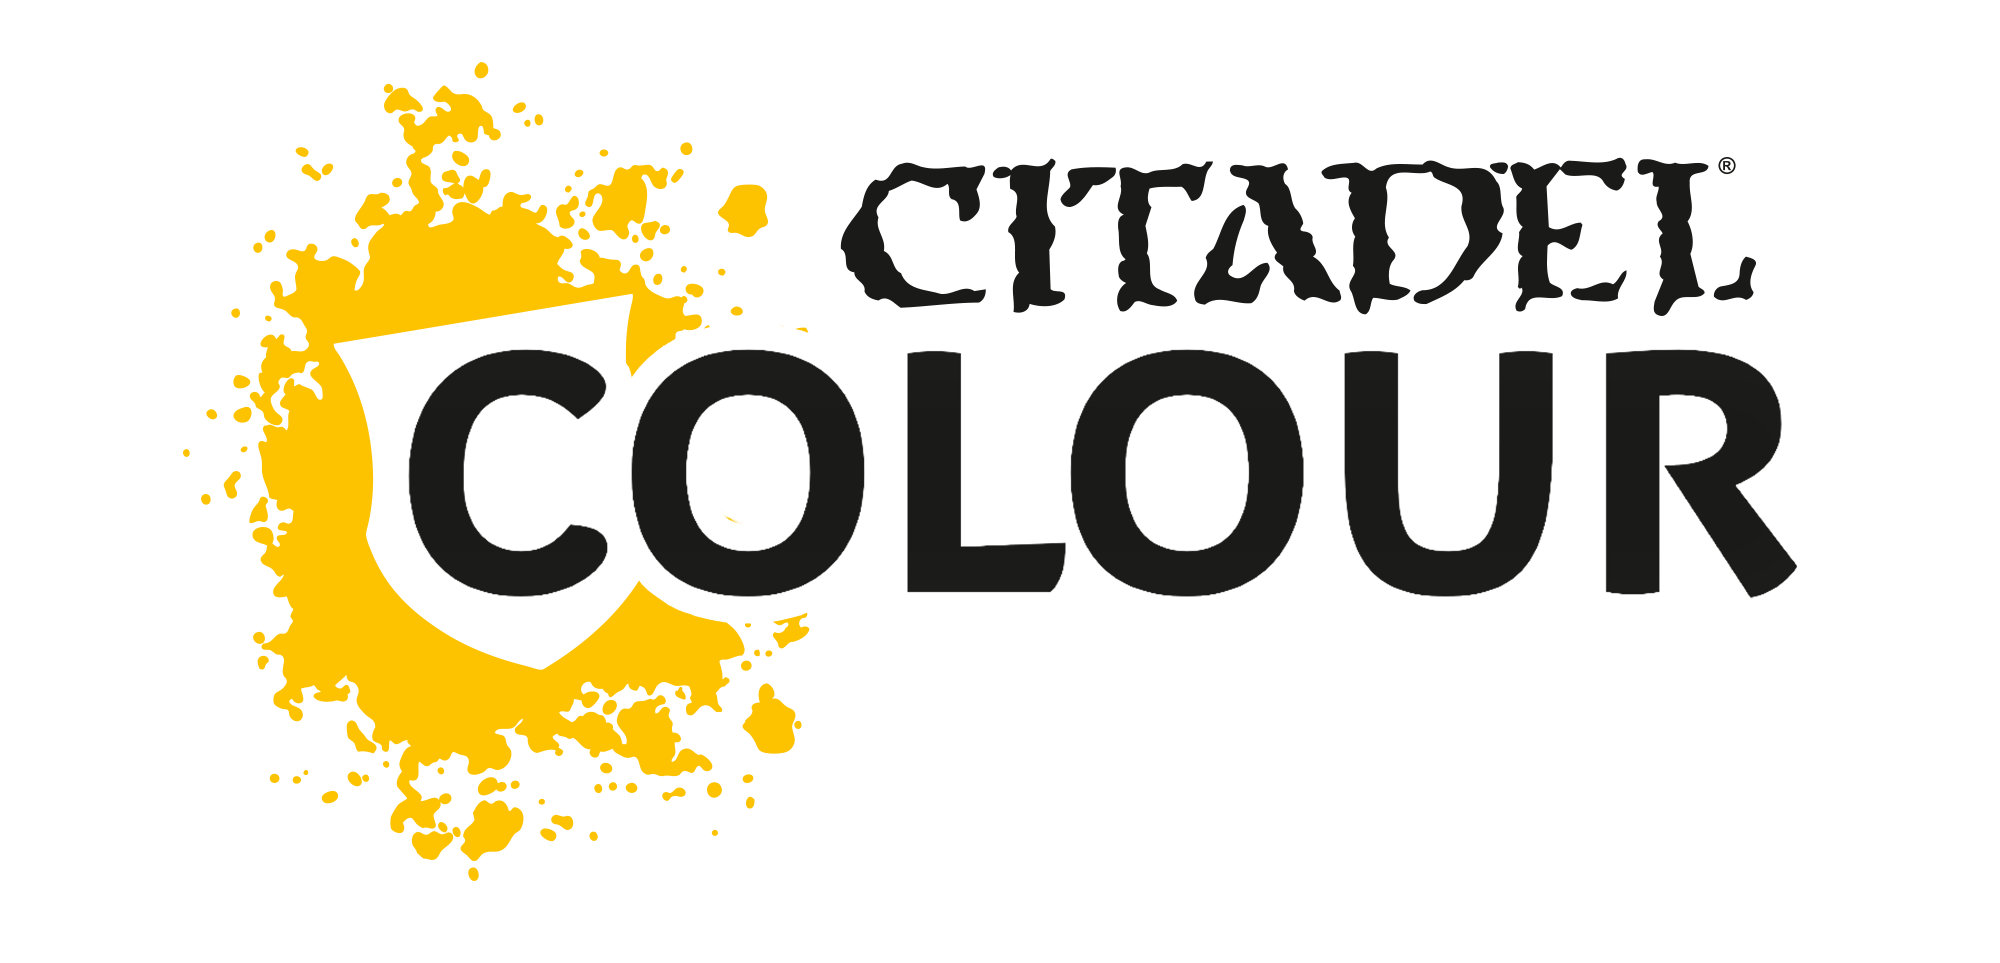 Paint: Citadel - Shade Citadel Colour: Shade Paint Set - Tower of Games